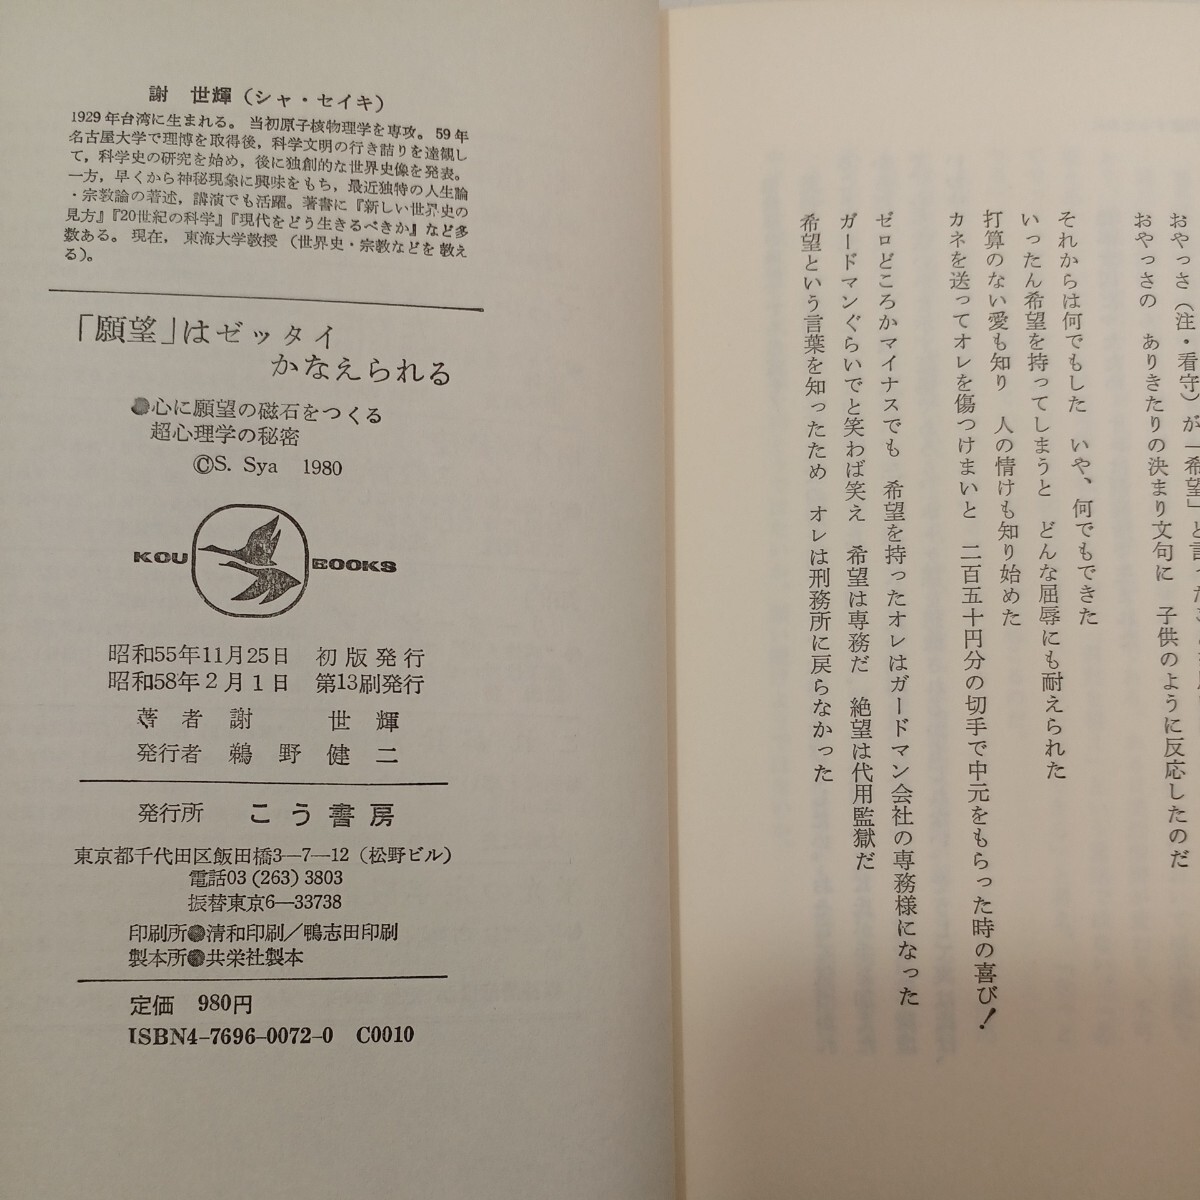 zaa-559♪願望はゼッタイかなえられる: 心に願望の磁石をつくる超心理学の秘密 (KOU BOOKS) 謝 世輝 (著) こう書房 (1983/2/1)